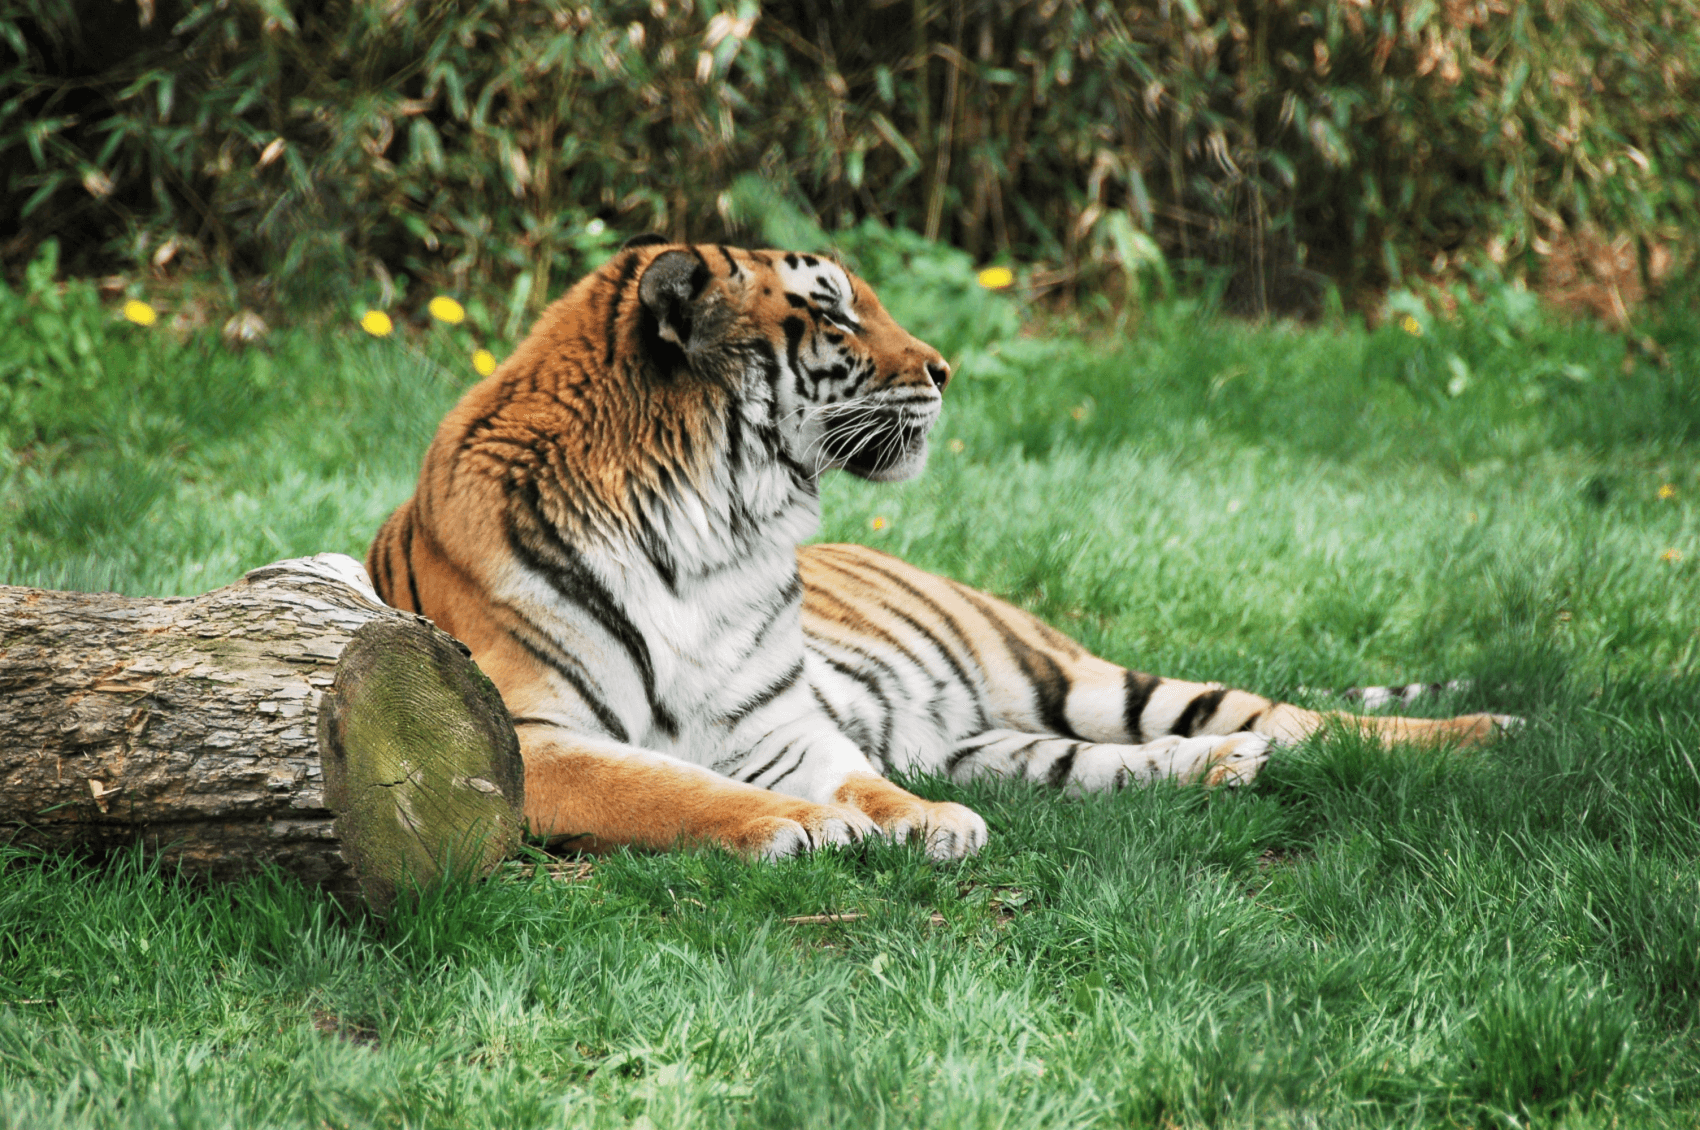 Tiger Zoo Vestal NY